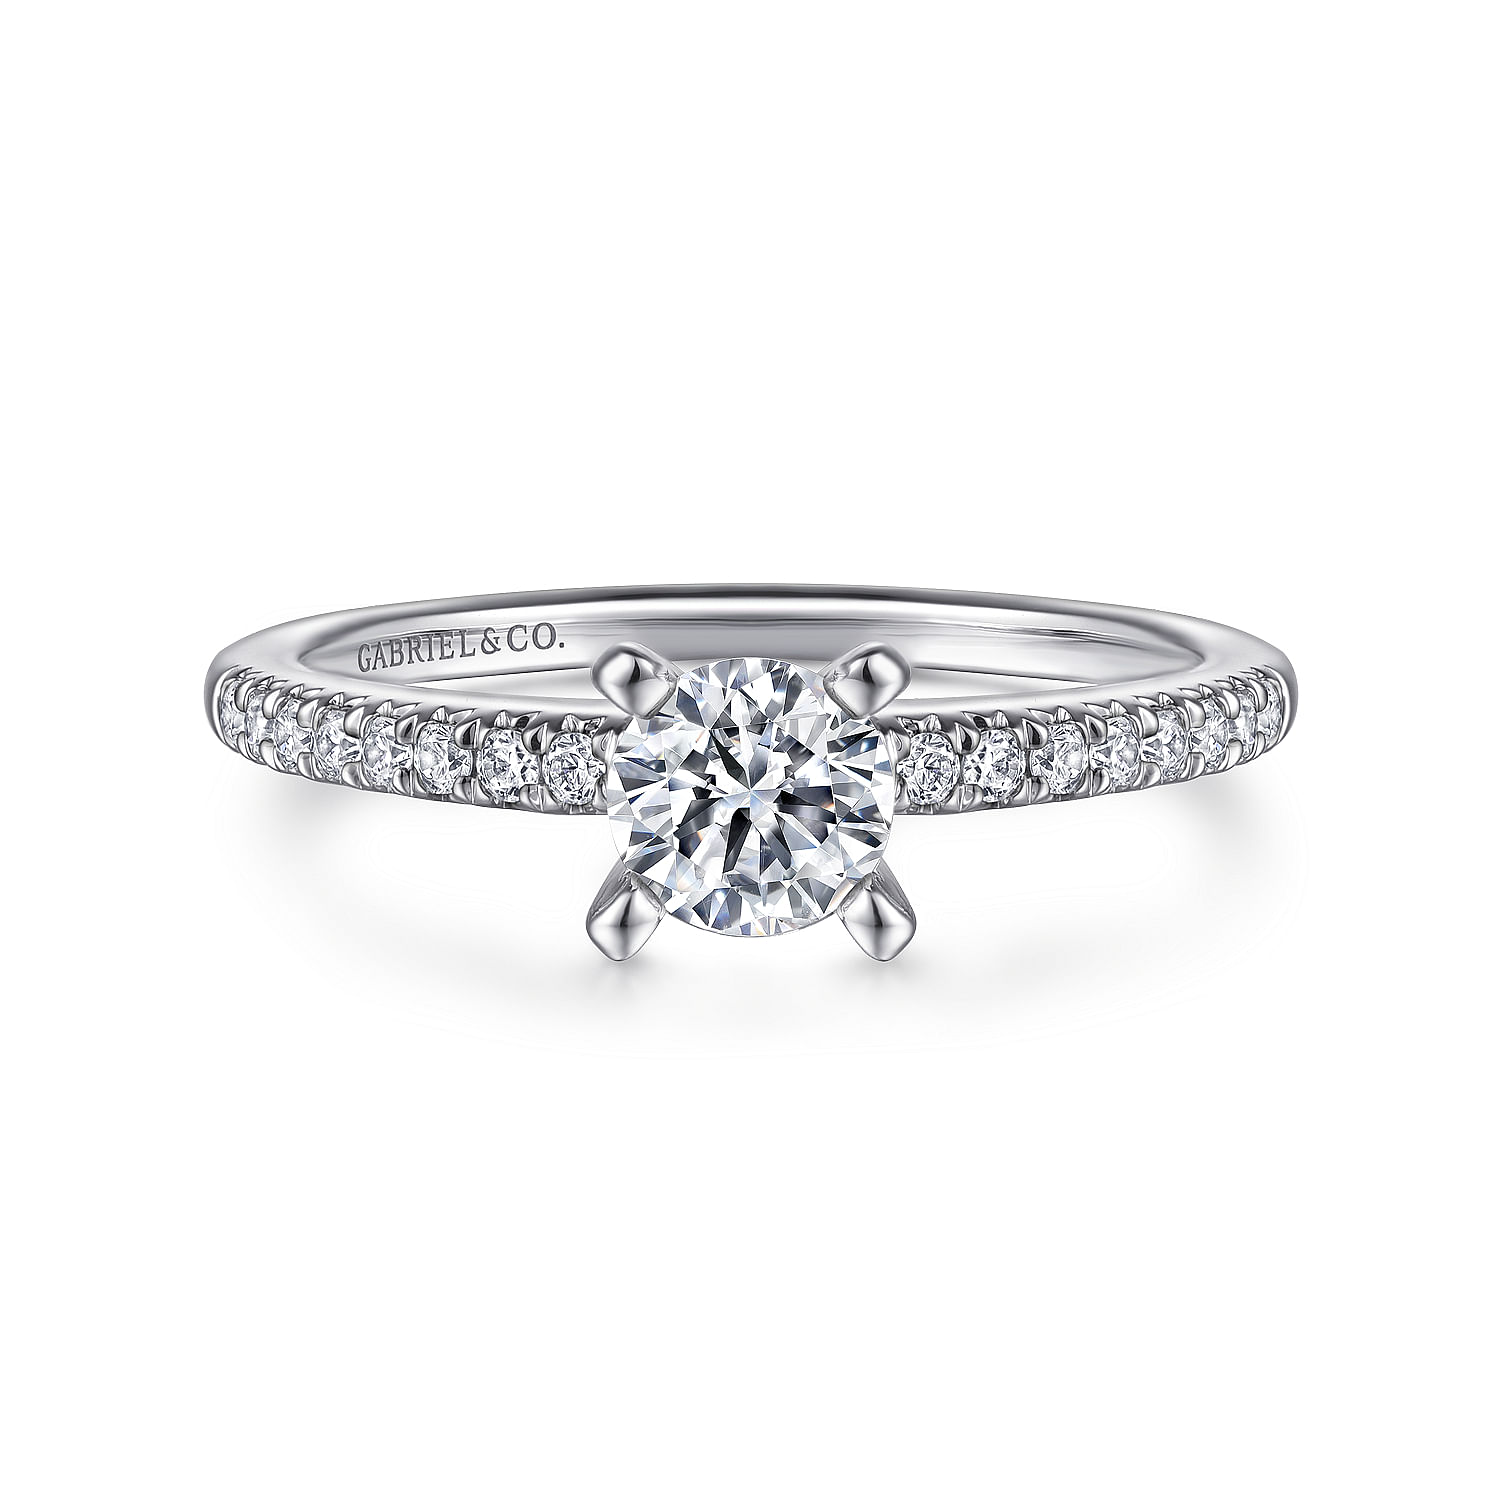 Kelly---14K-White-Gold-Round-Diamond-Engagement-Ring1